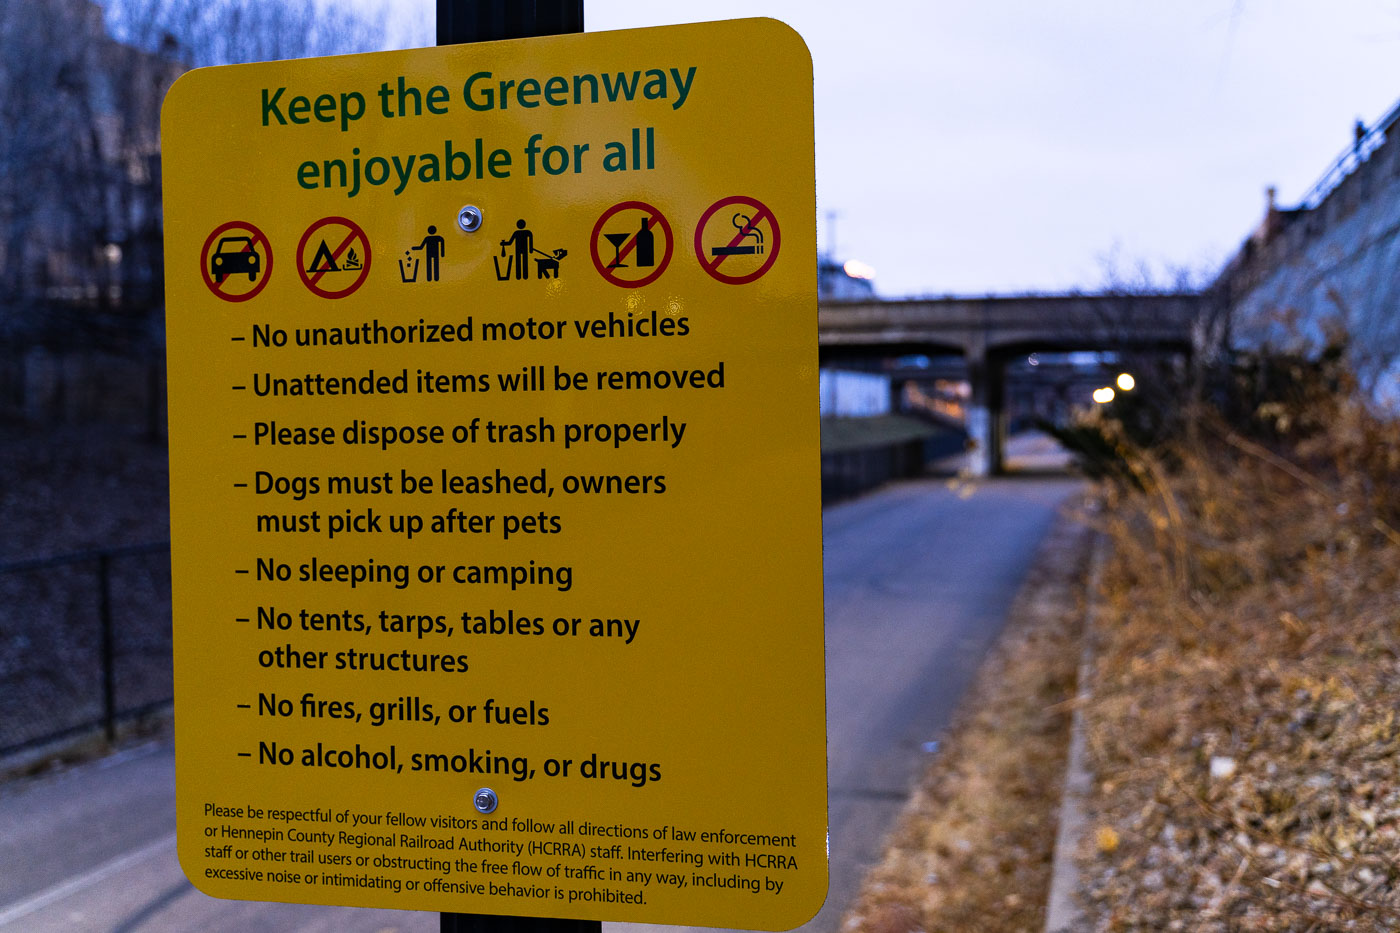 Keep the greenway enjoyable for all sign